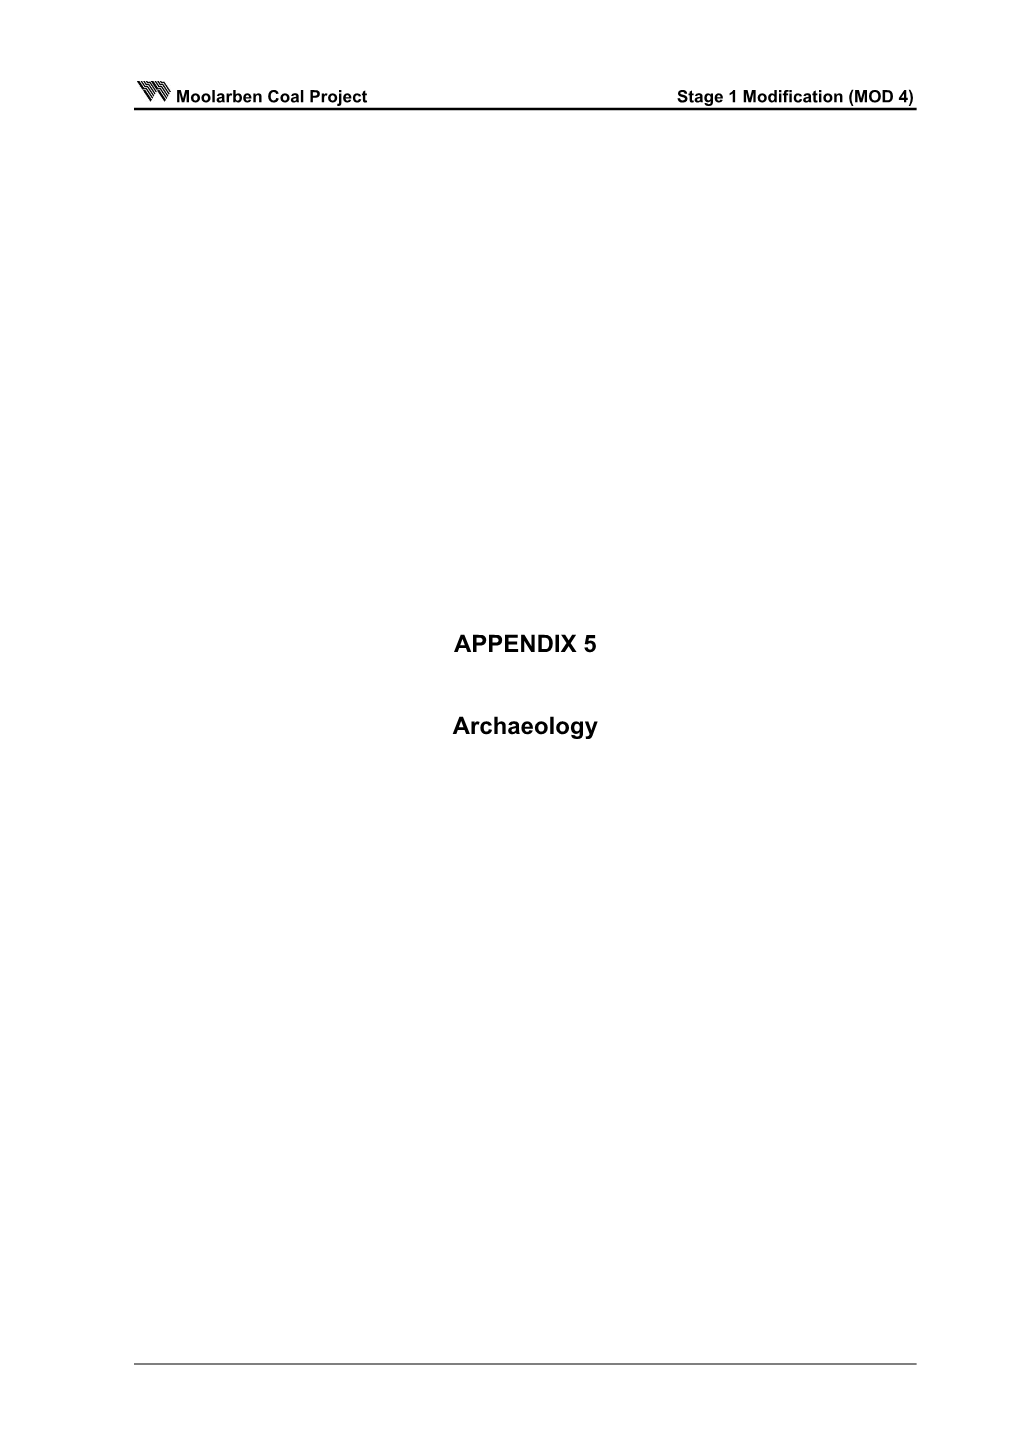 APPENDIX 5 Archaeology